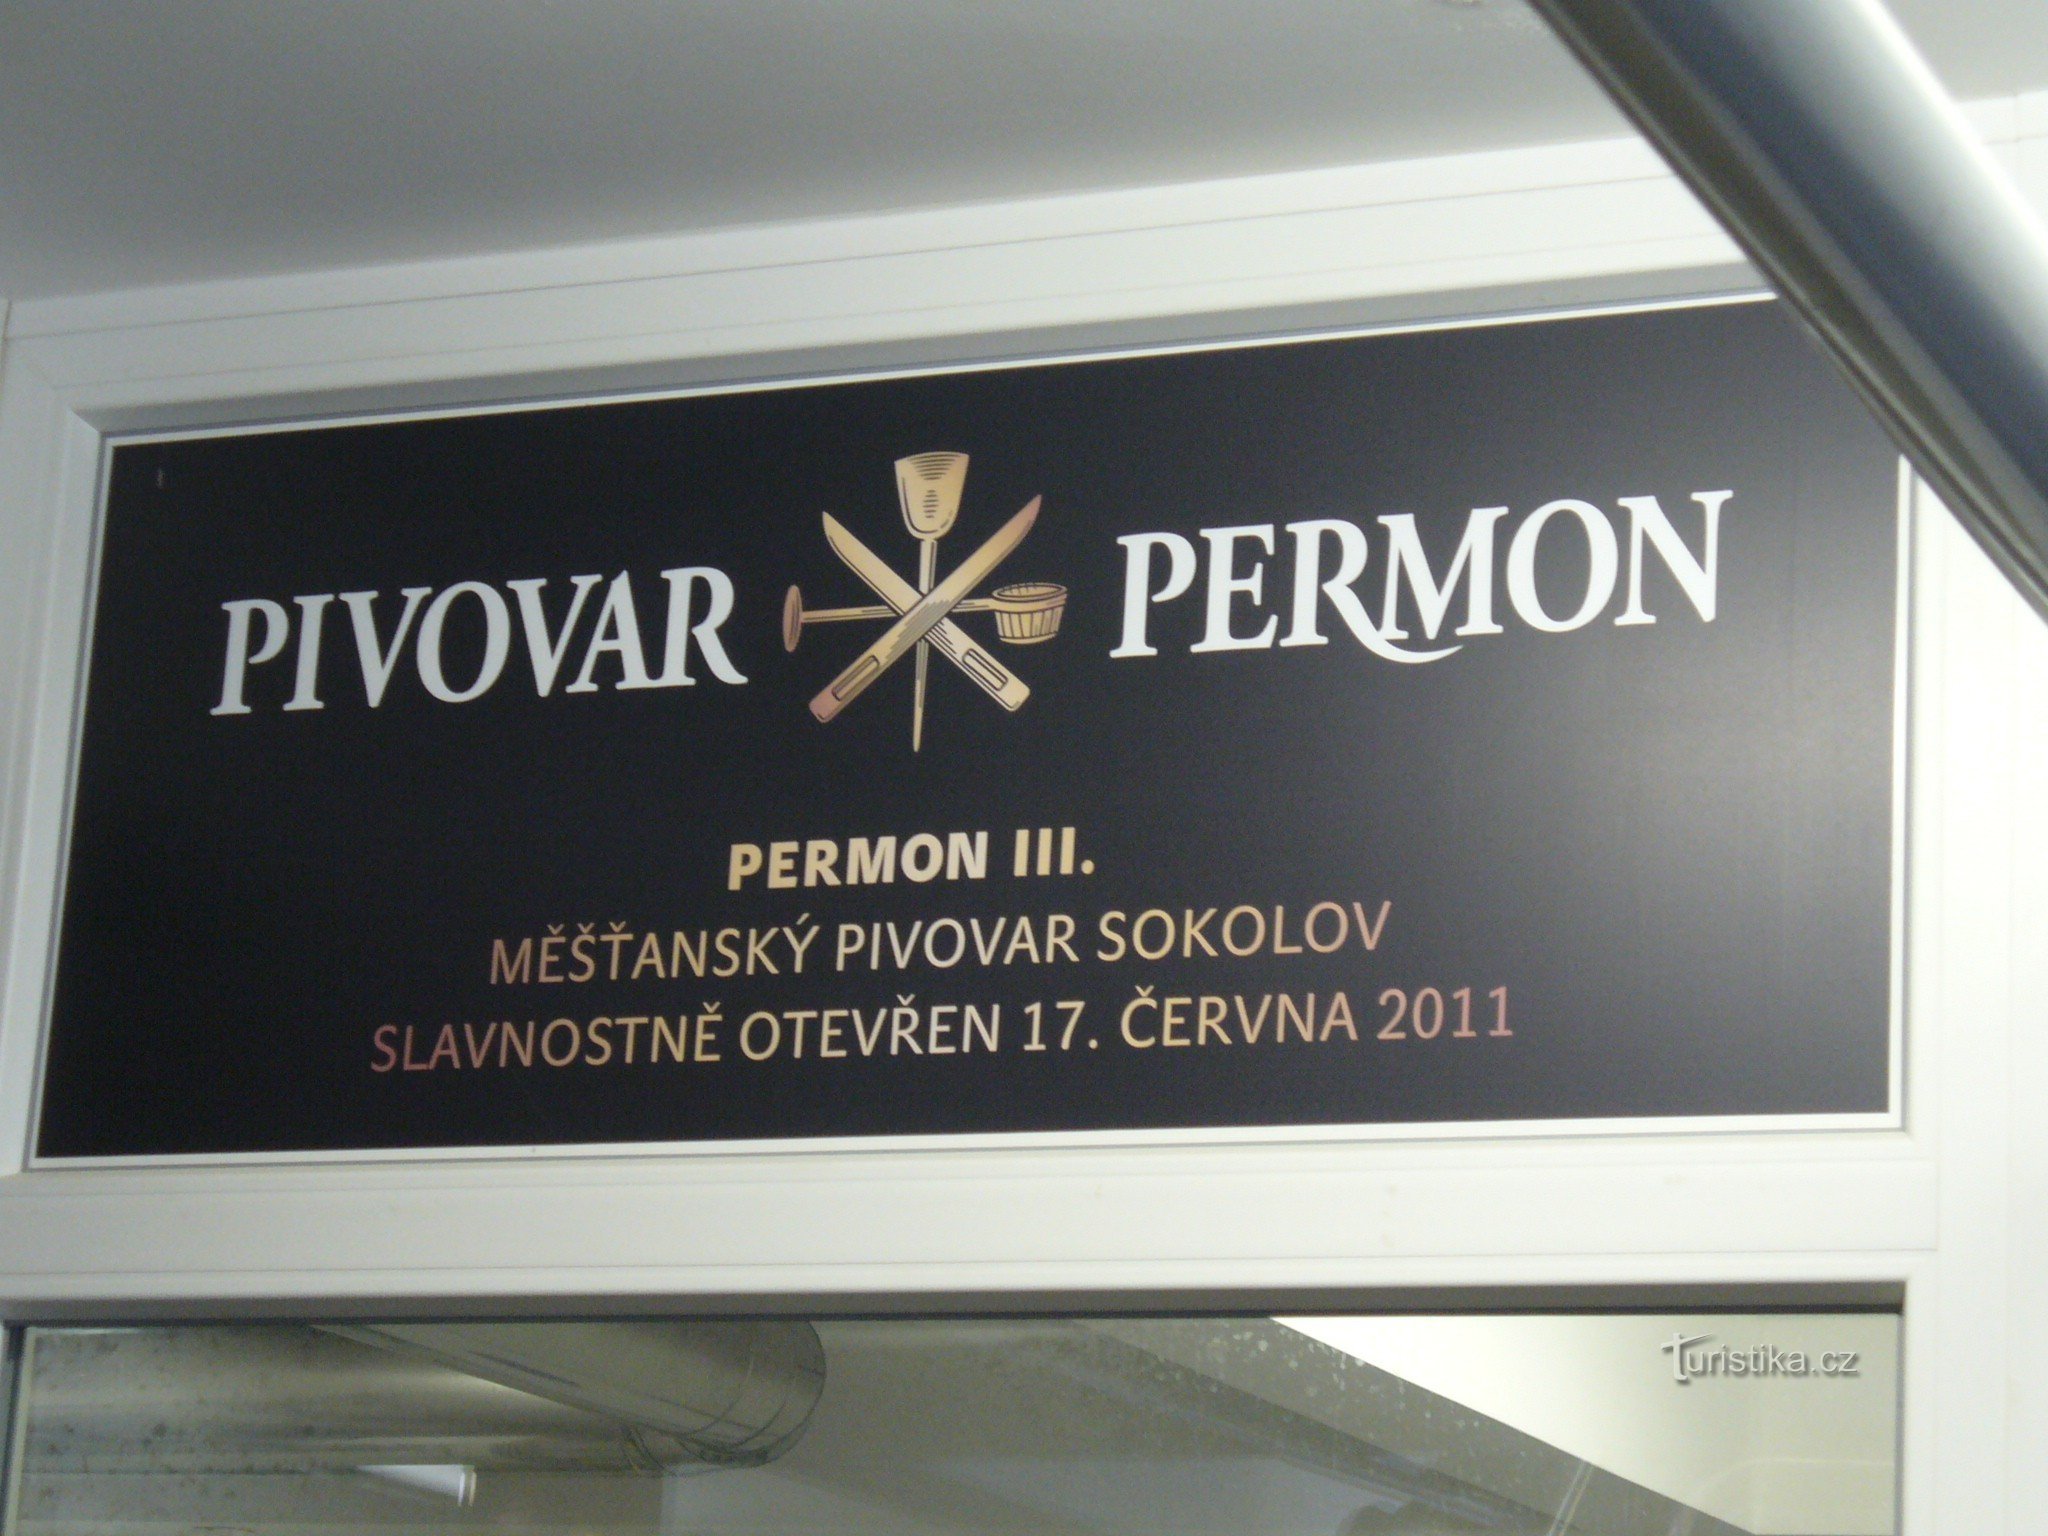 Pivovara Permon